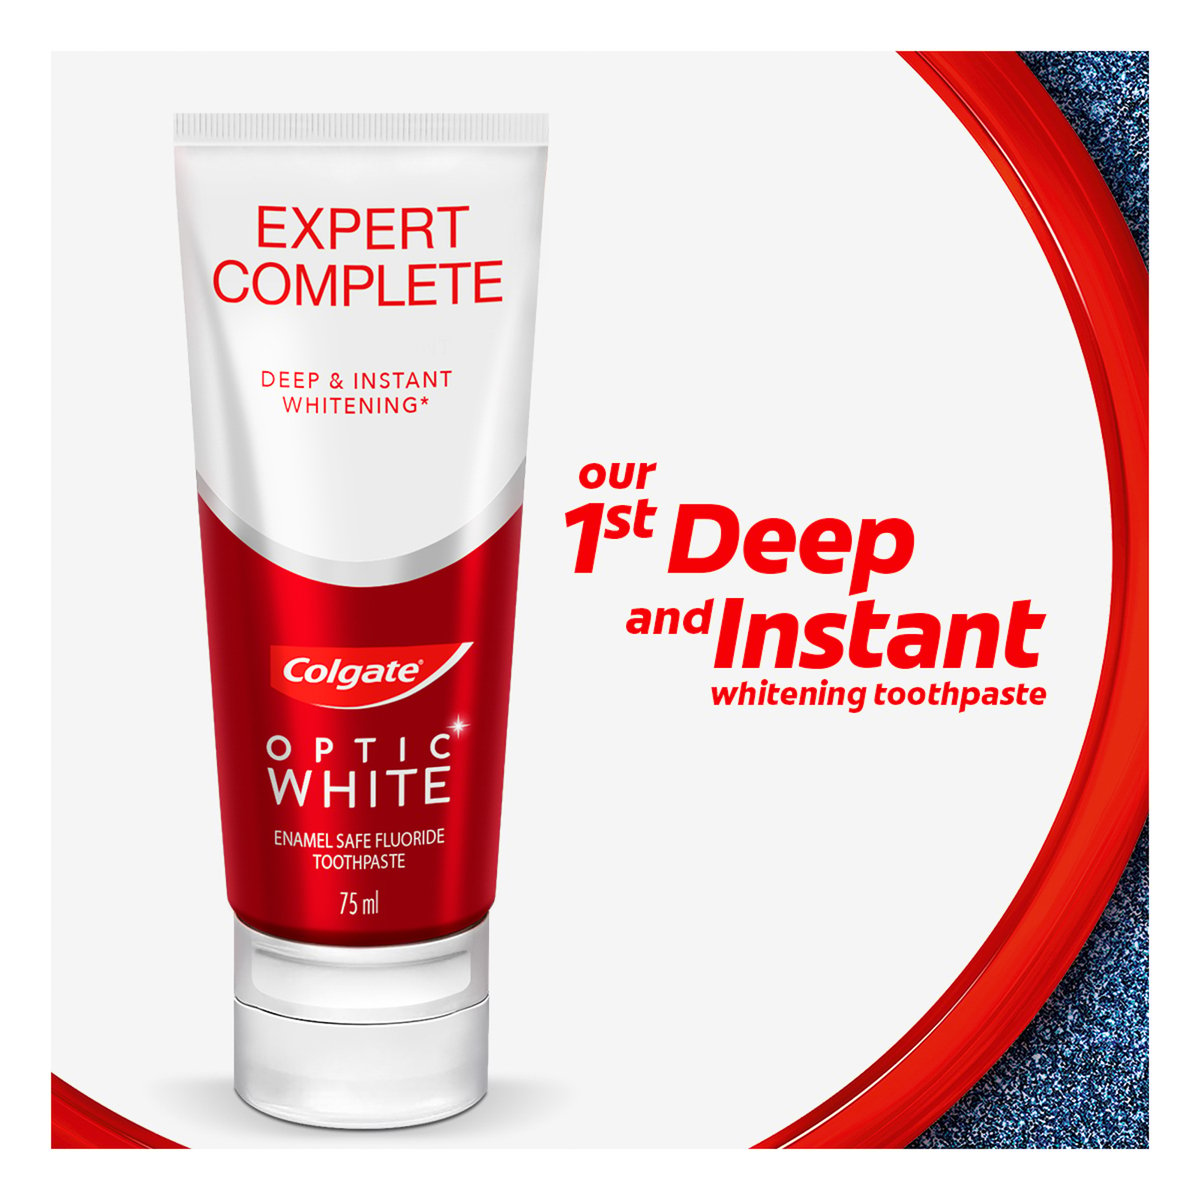 Colgate Optic White Expert Complete Teeth Whitening Toothpaste 75 ml